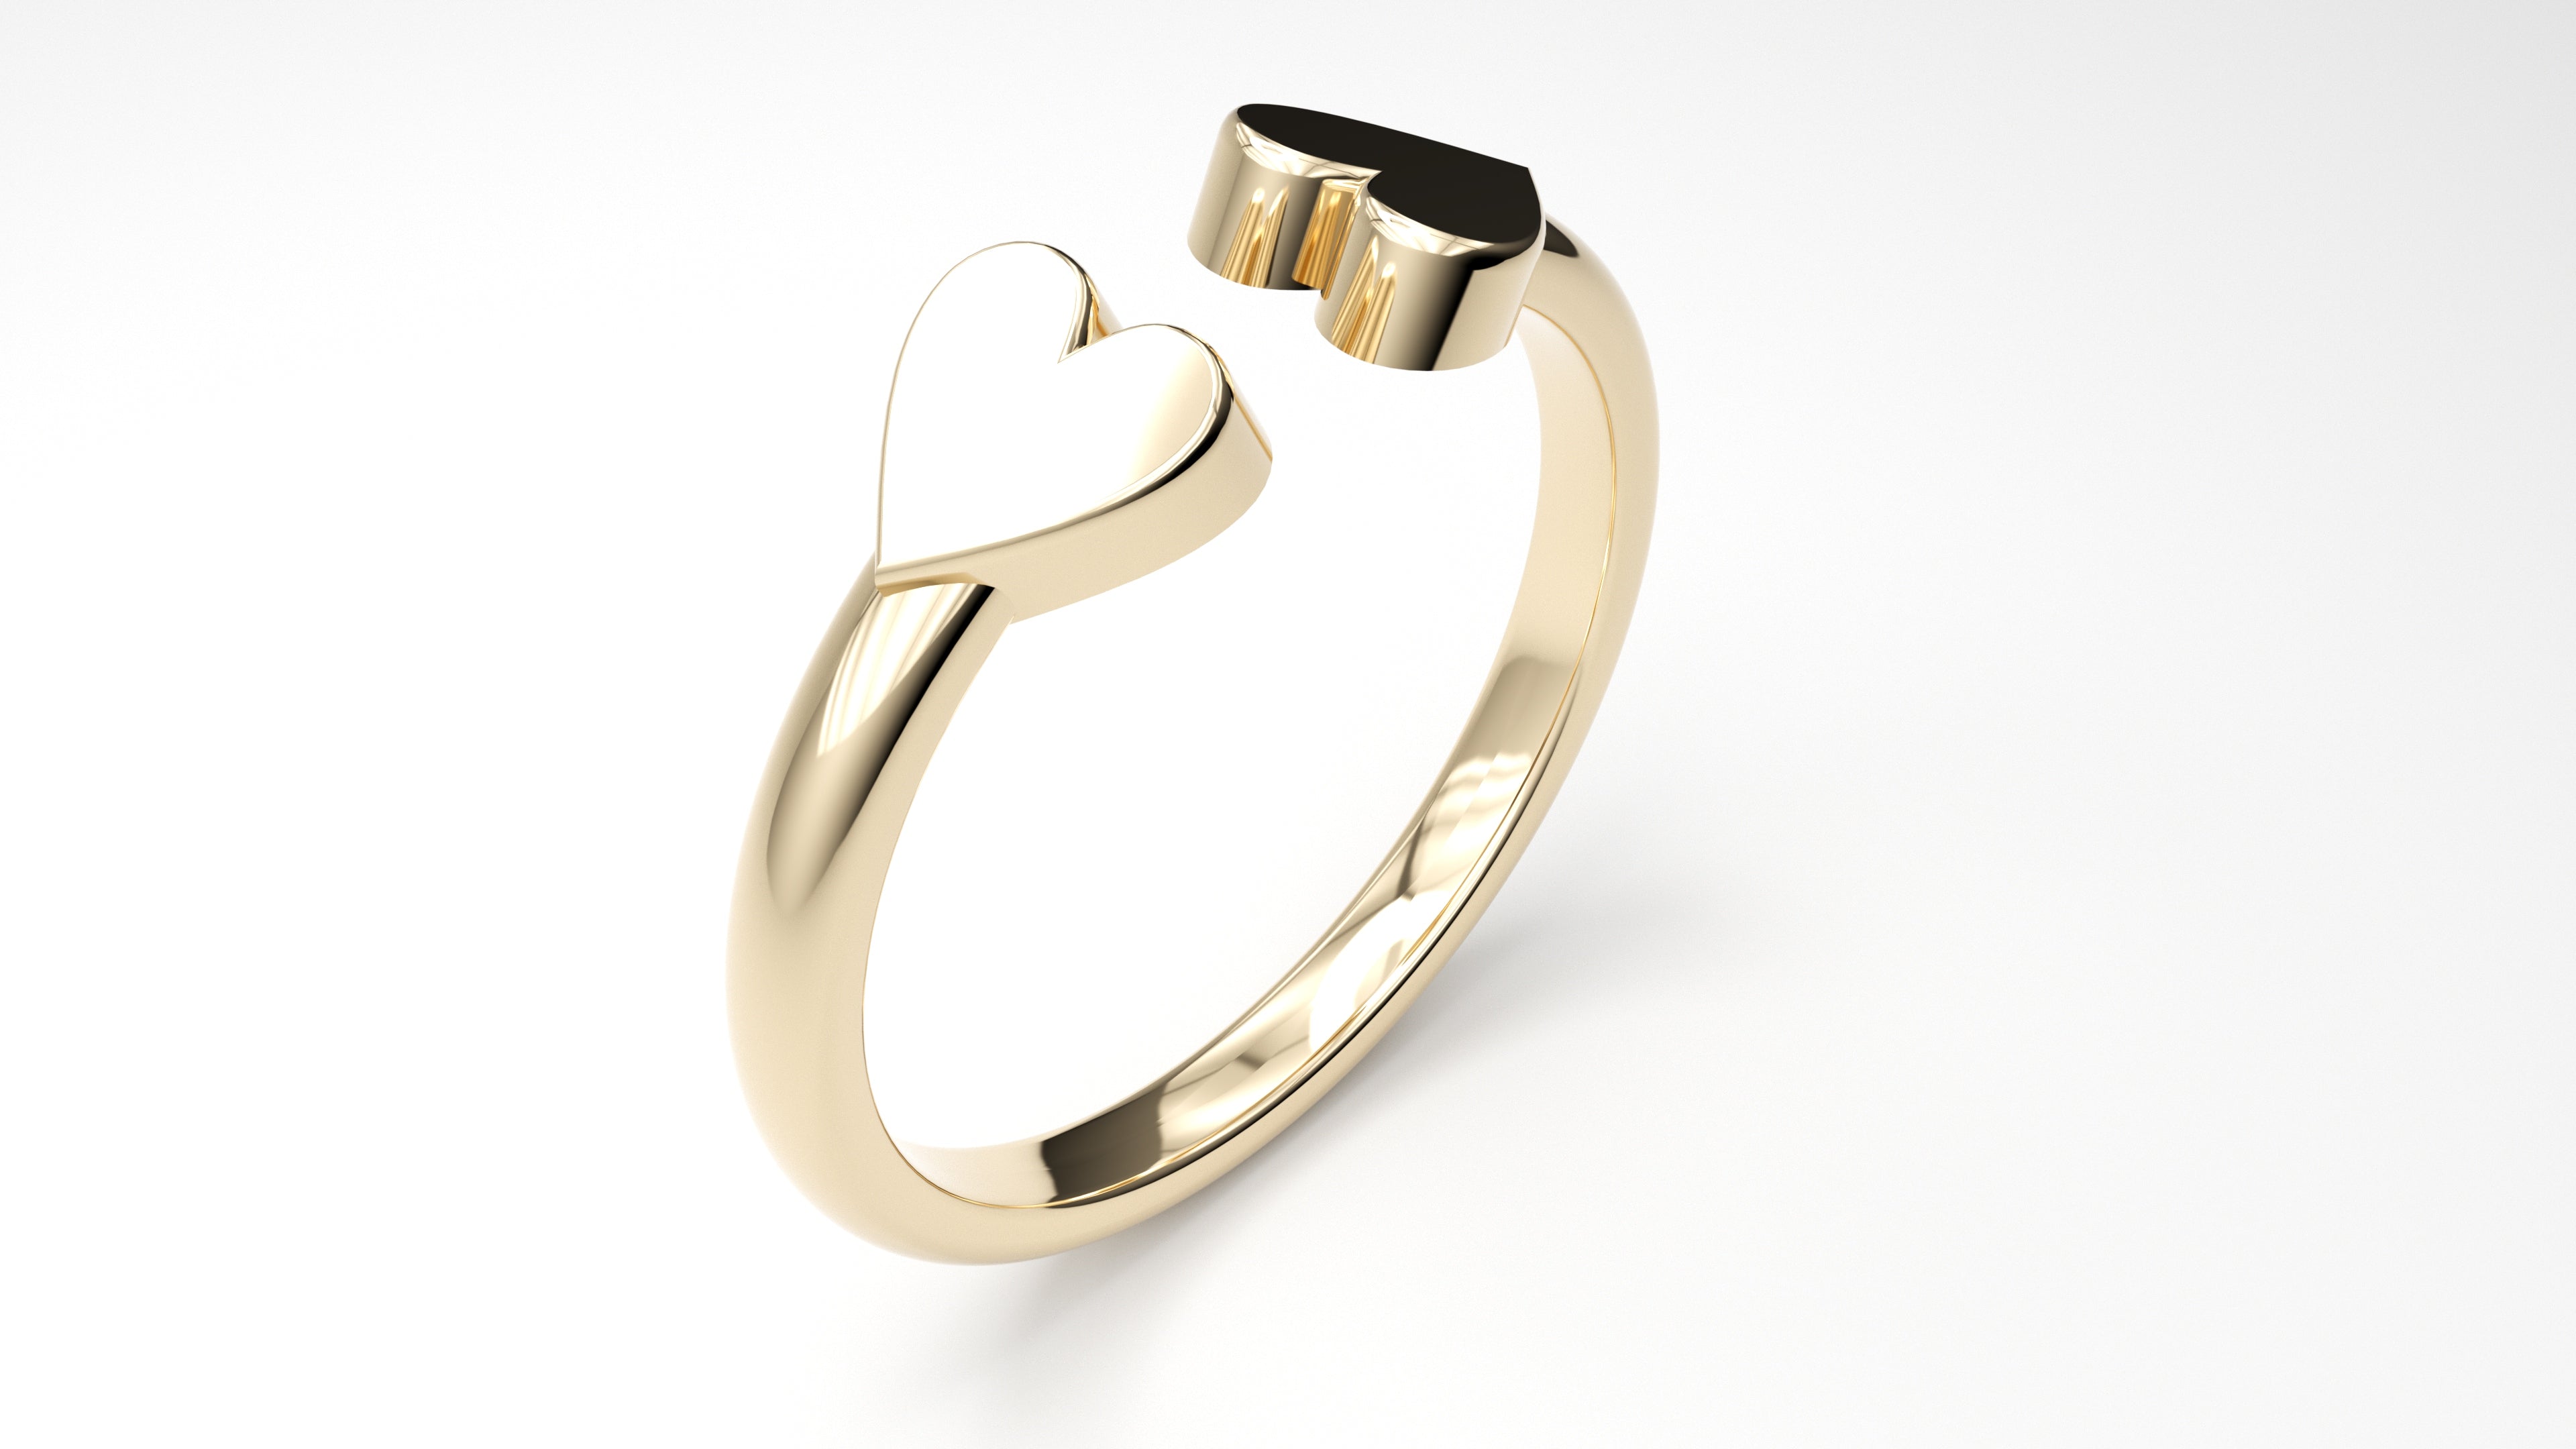 Plain Heart Design Gold Ring 02-14 - SPE Gold,Chennai